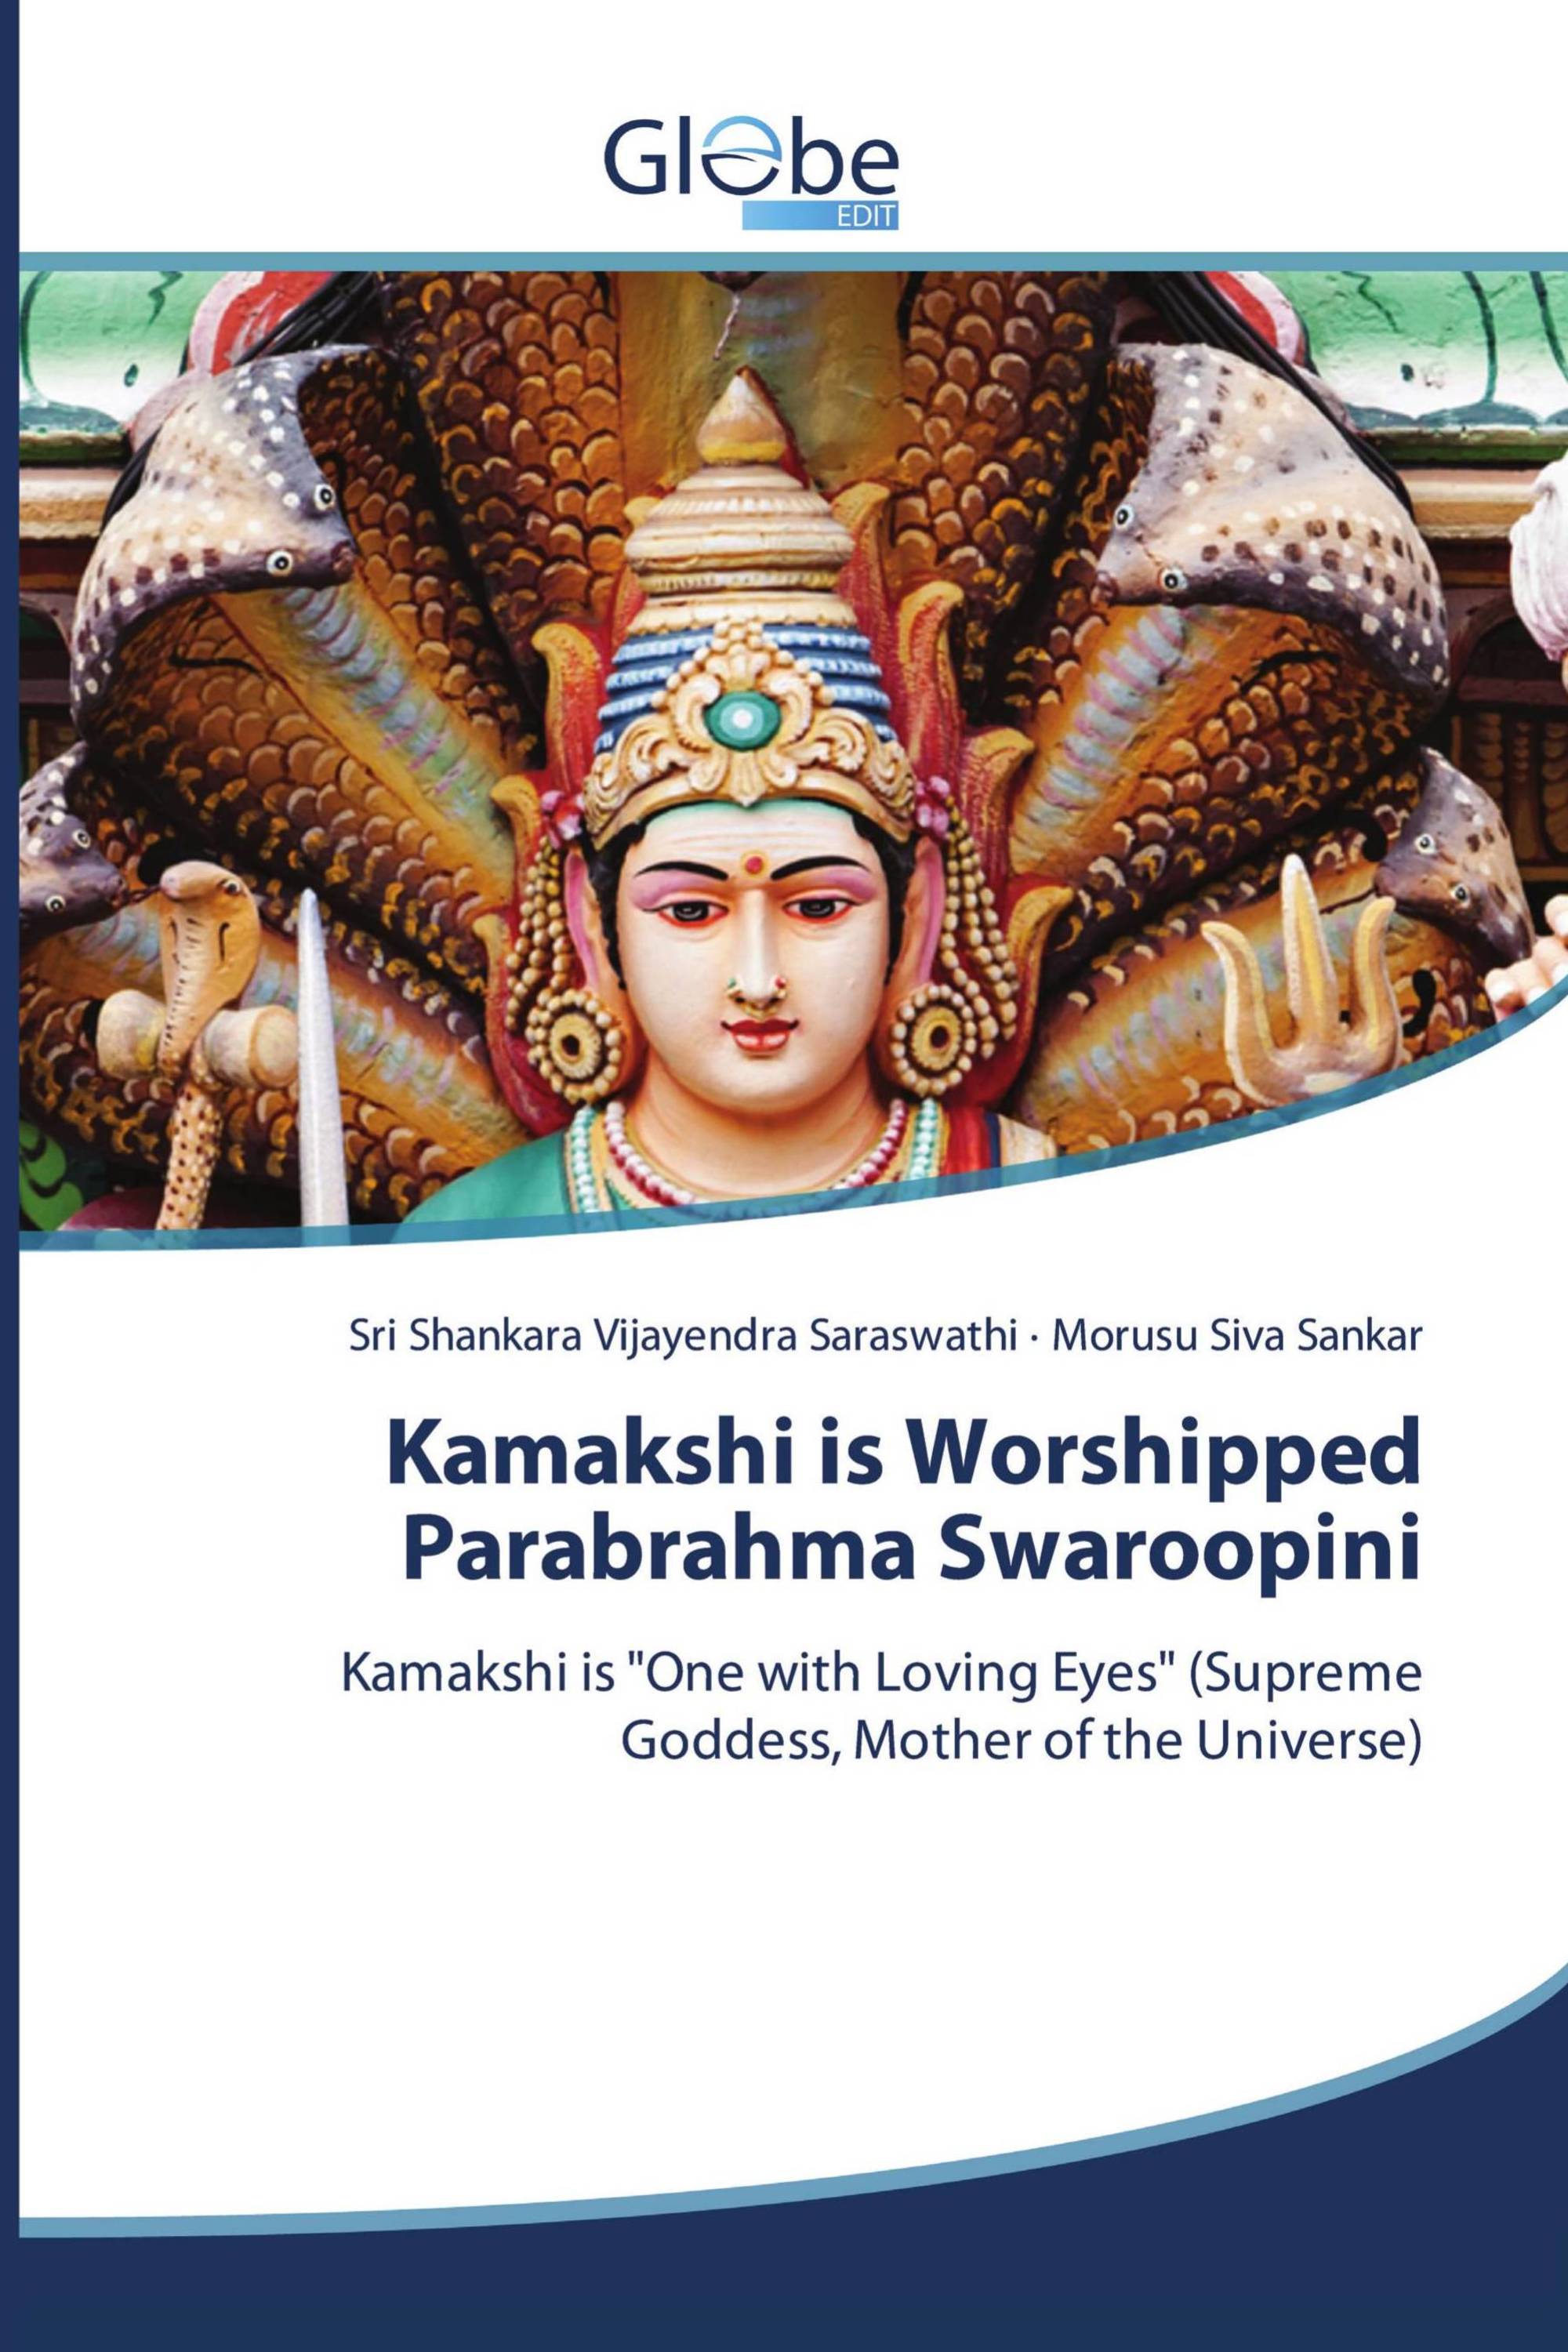 About Devi Kamakshi: The Supreme Goddess Of